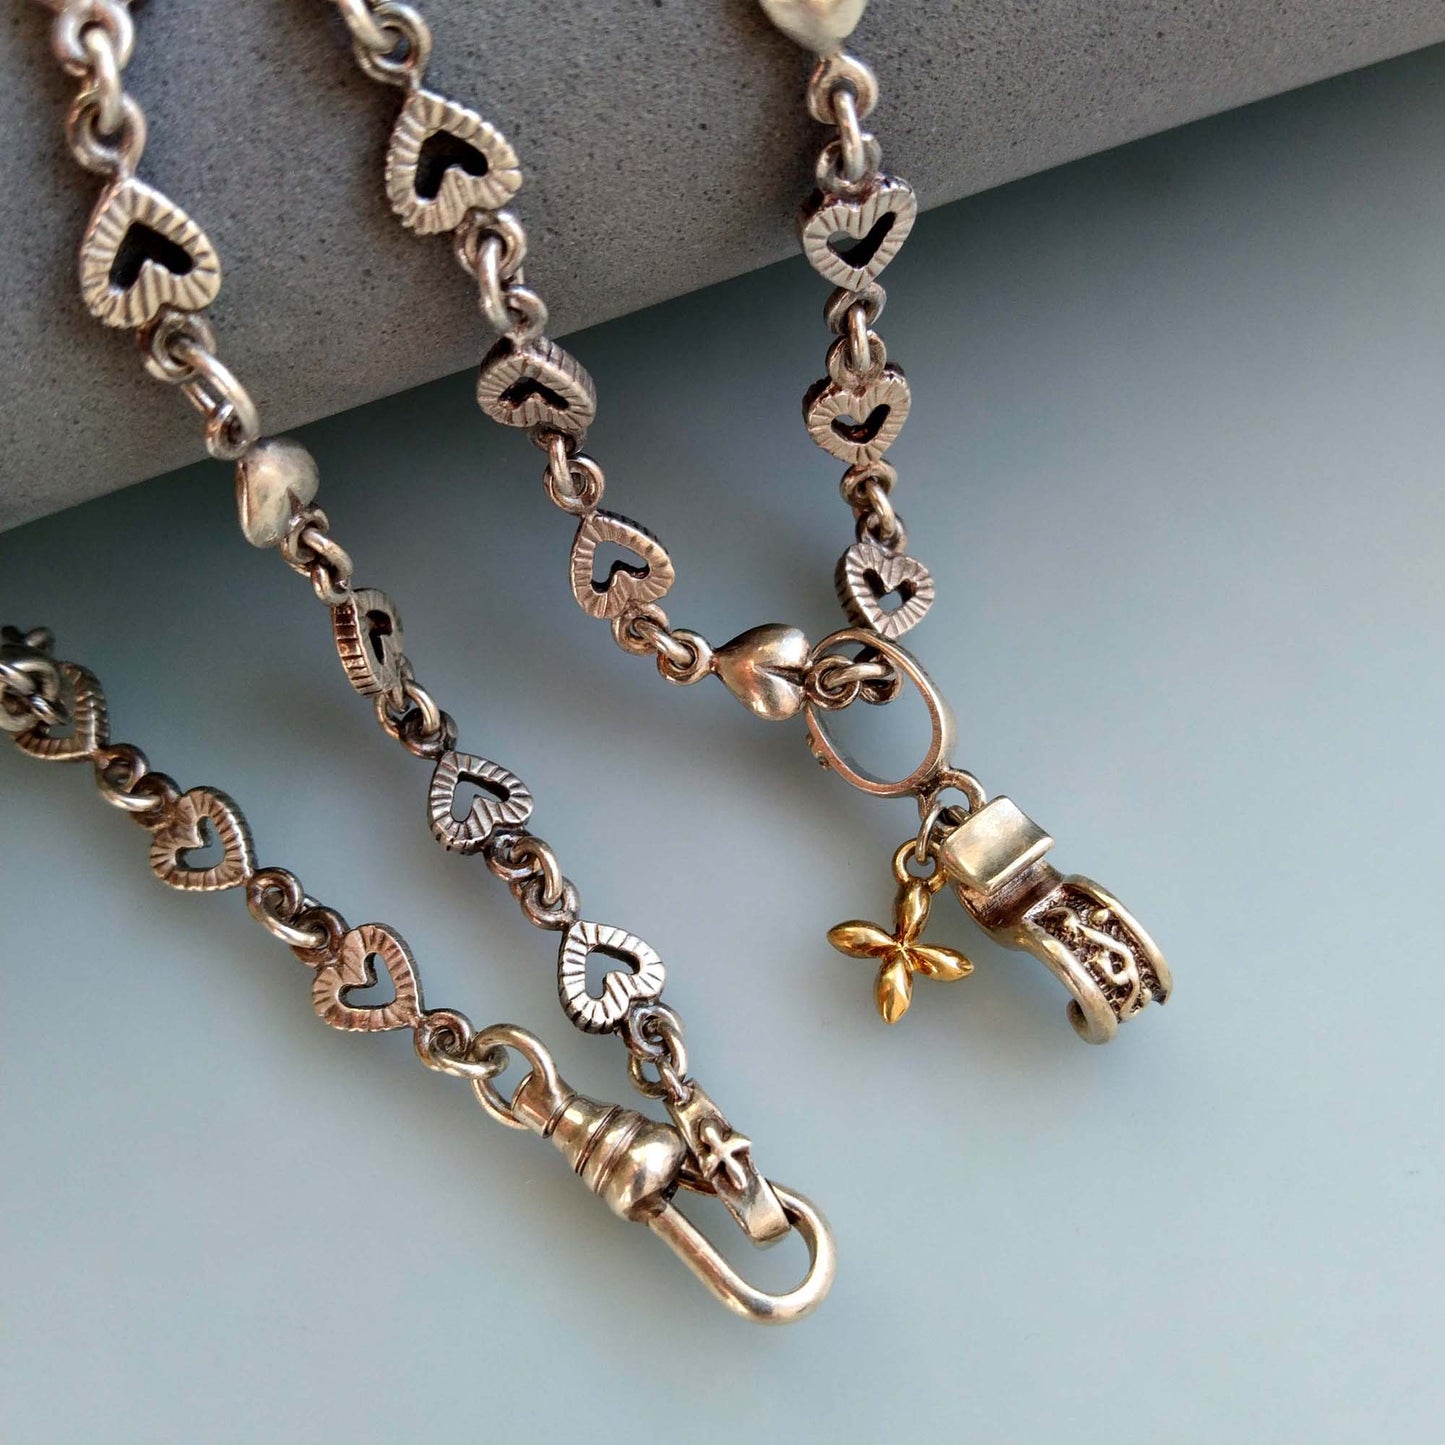 Letter S Charm Loree Rodkin Necklace, 18K Gold Cross, Sterling Silver Designer Jewelry